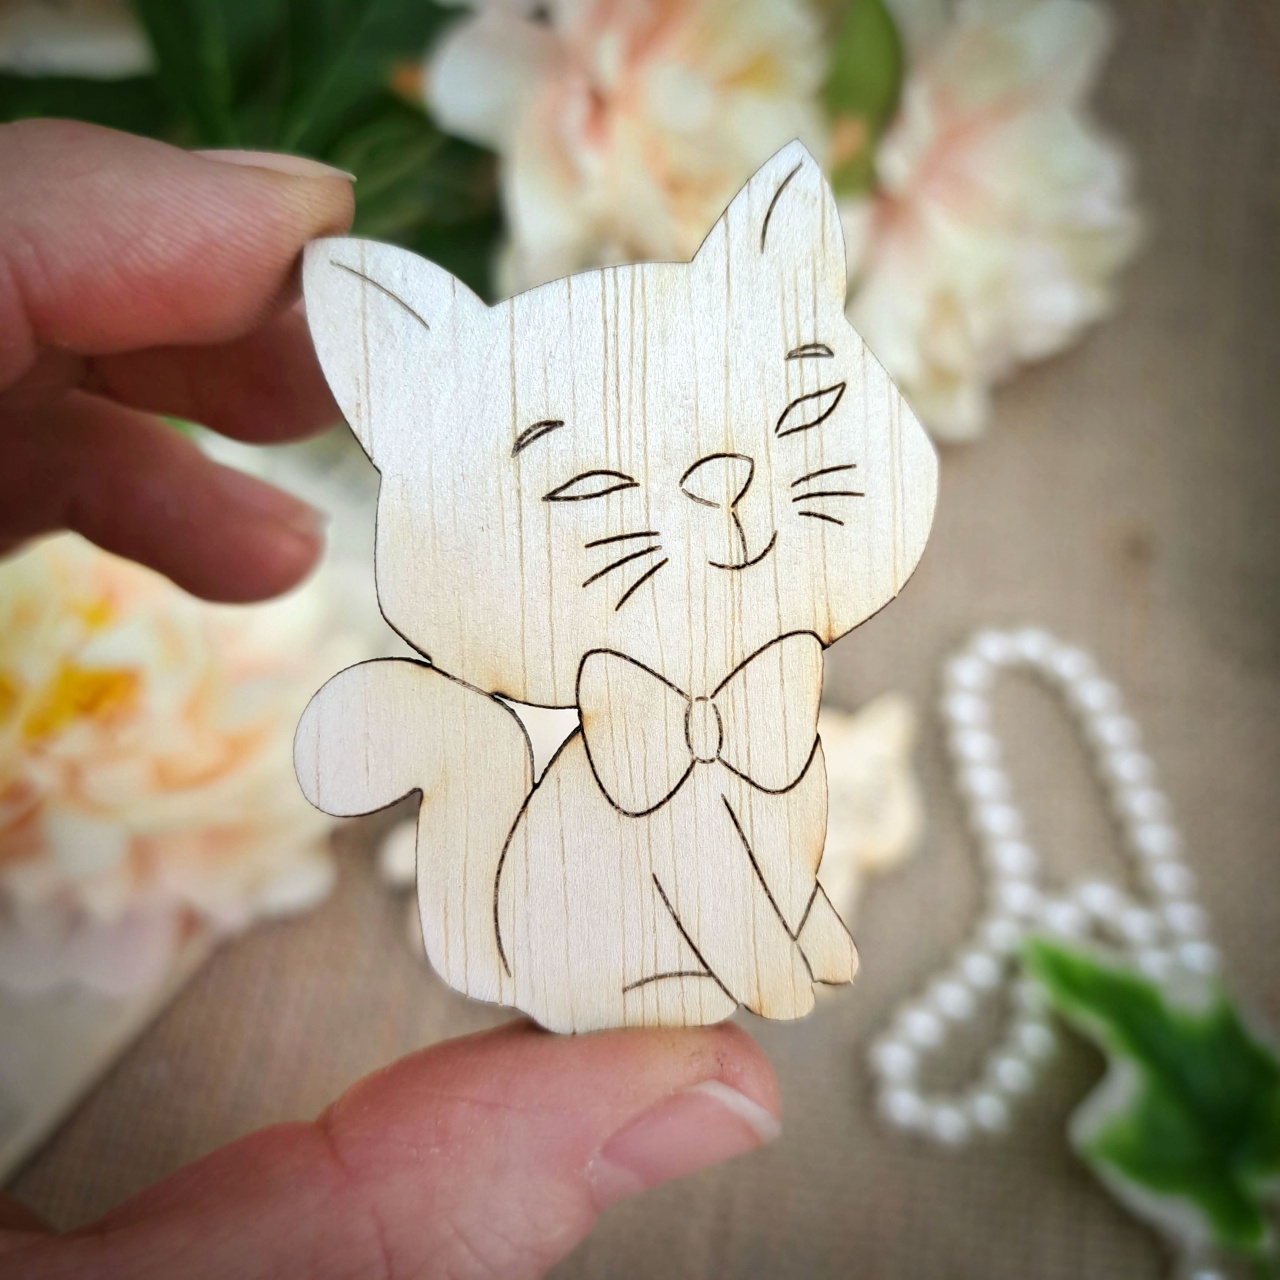 Pisica Kitty, 4,4×6 cm, placaj lemn :: 6 cm